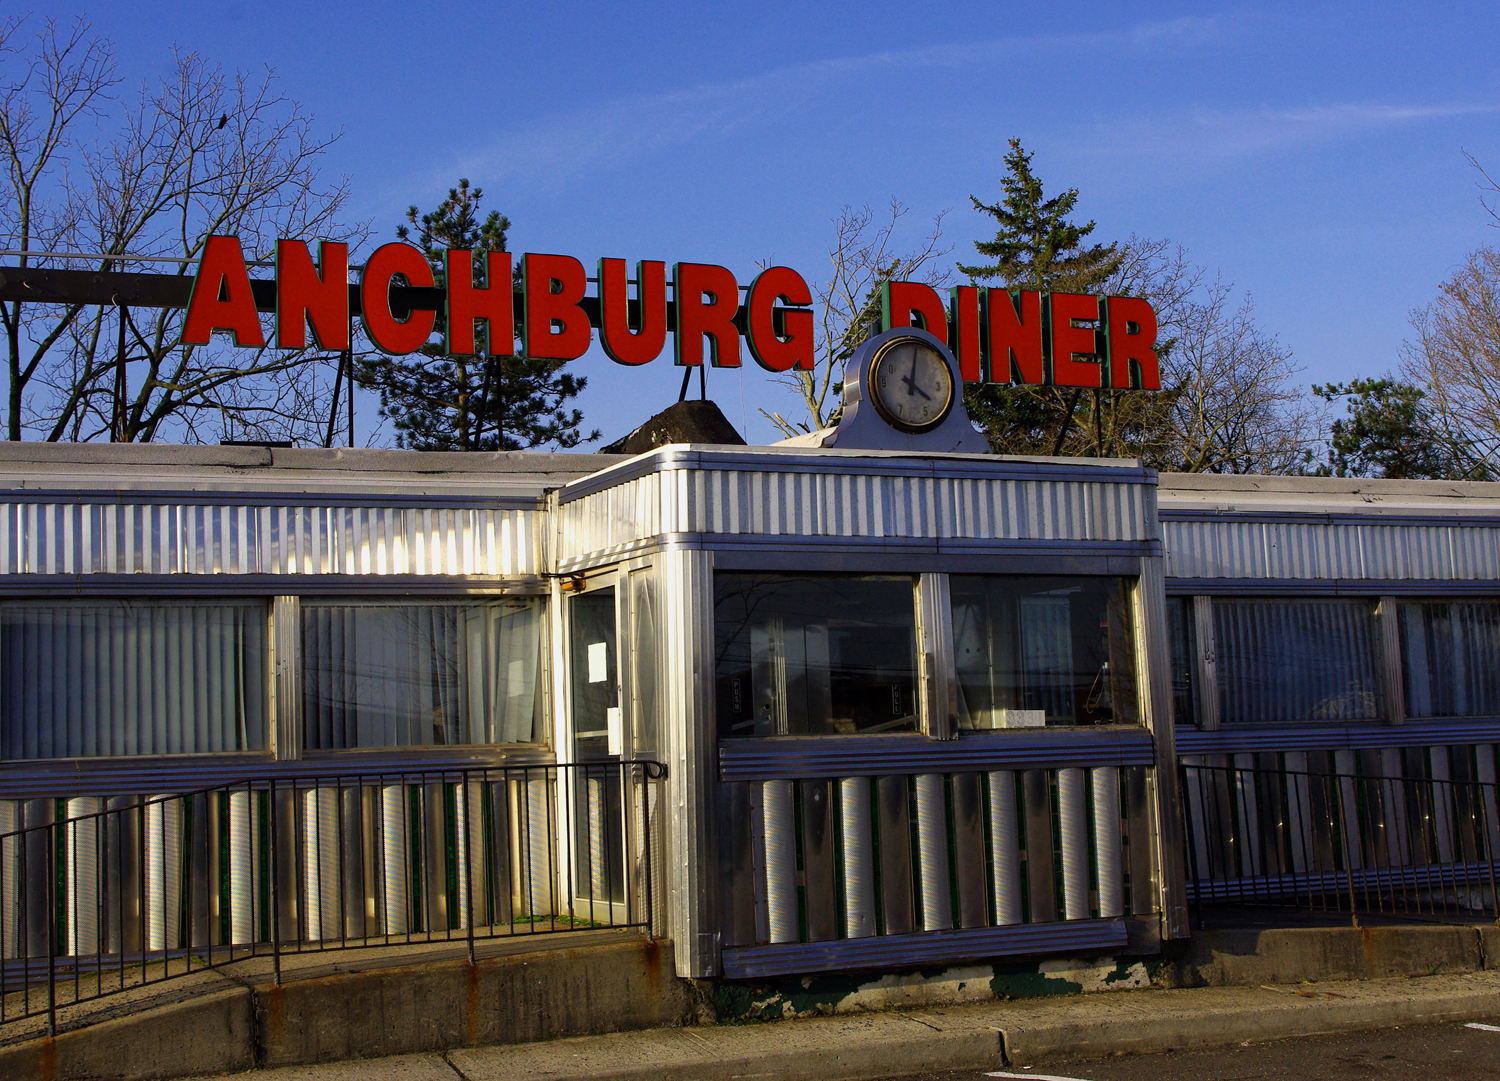 The Branchburg Diner